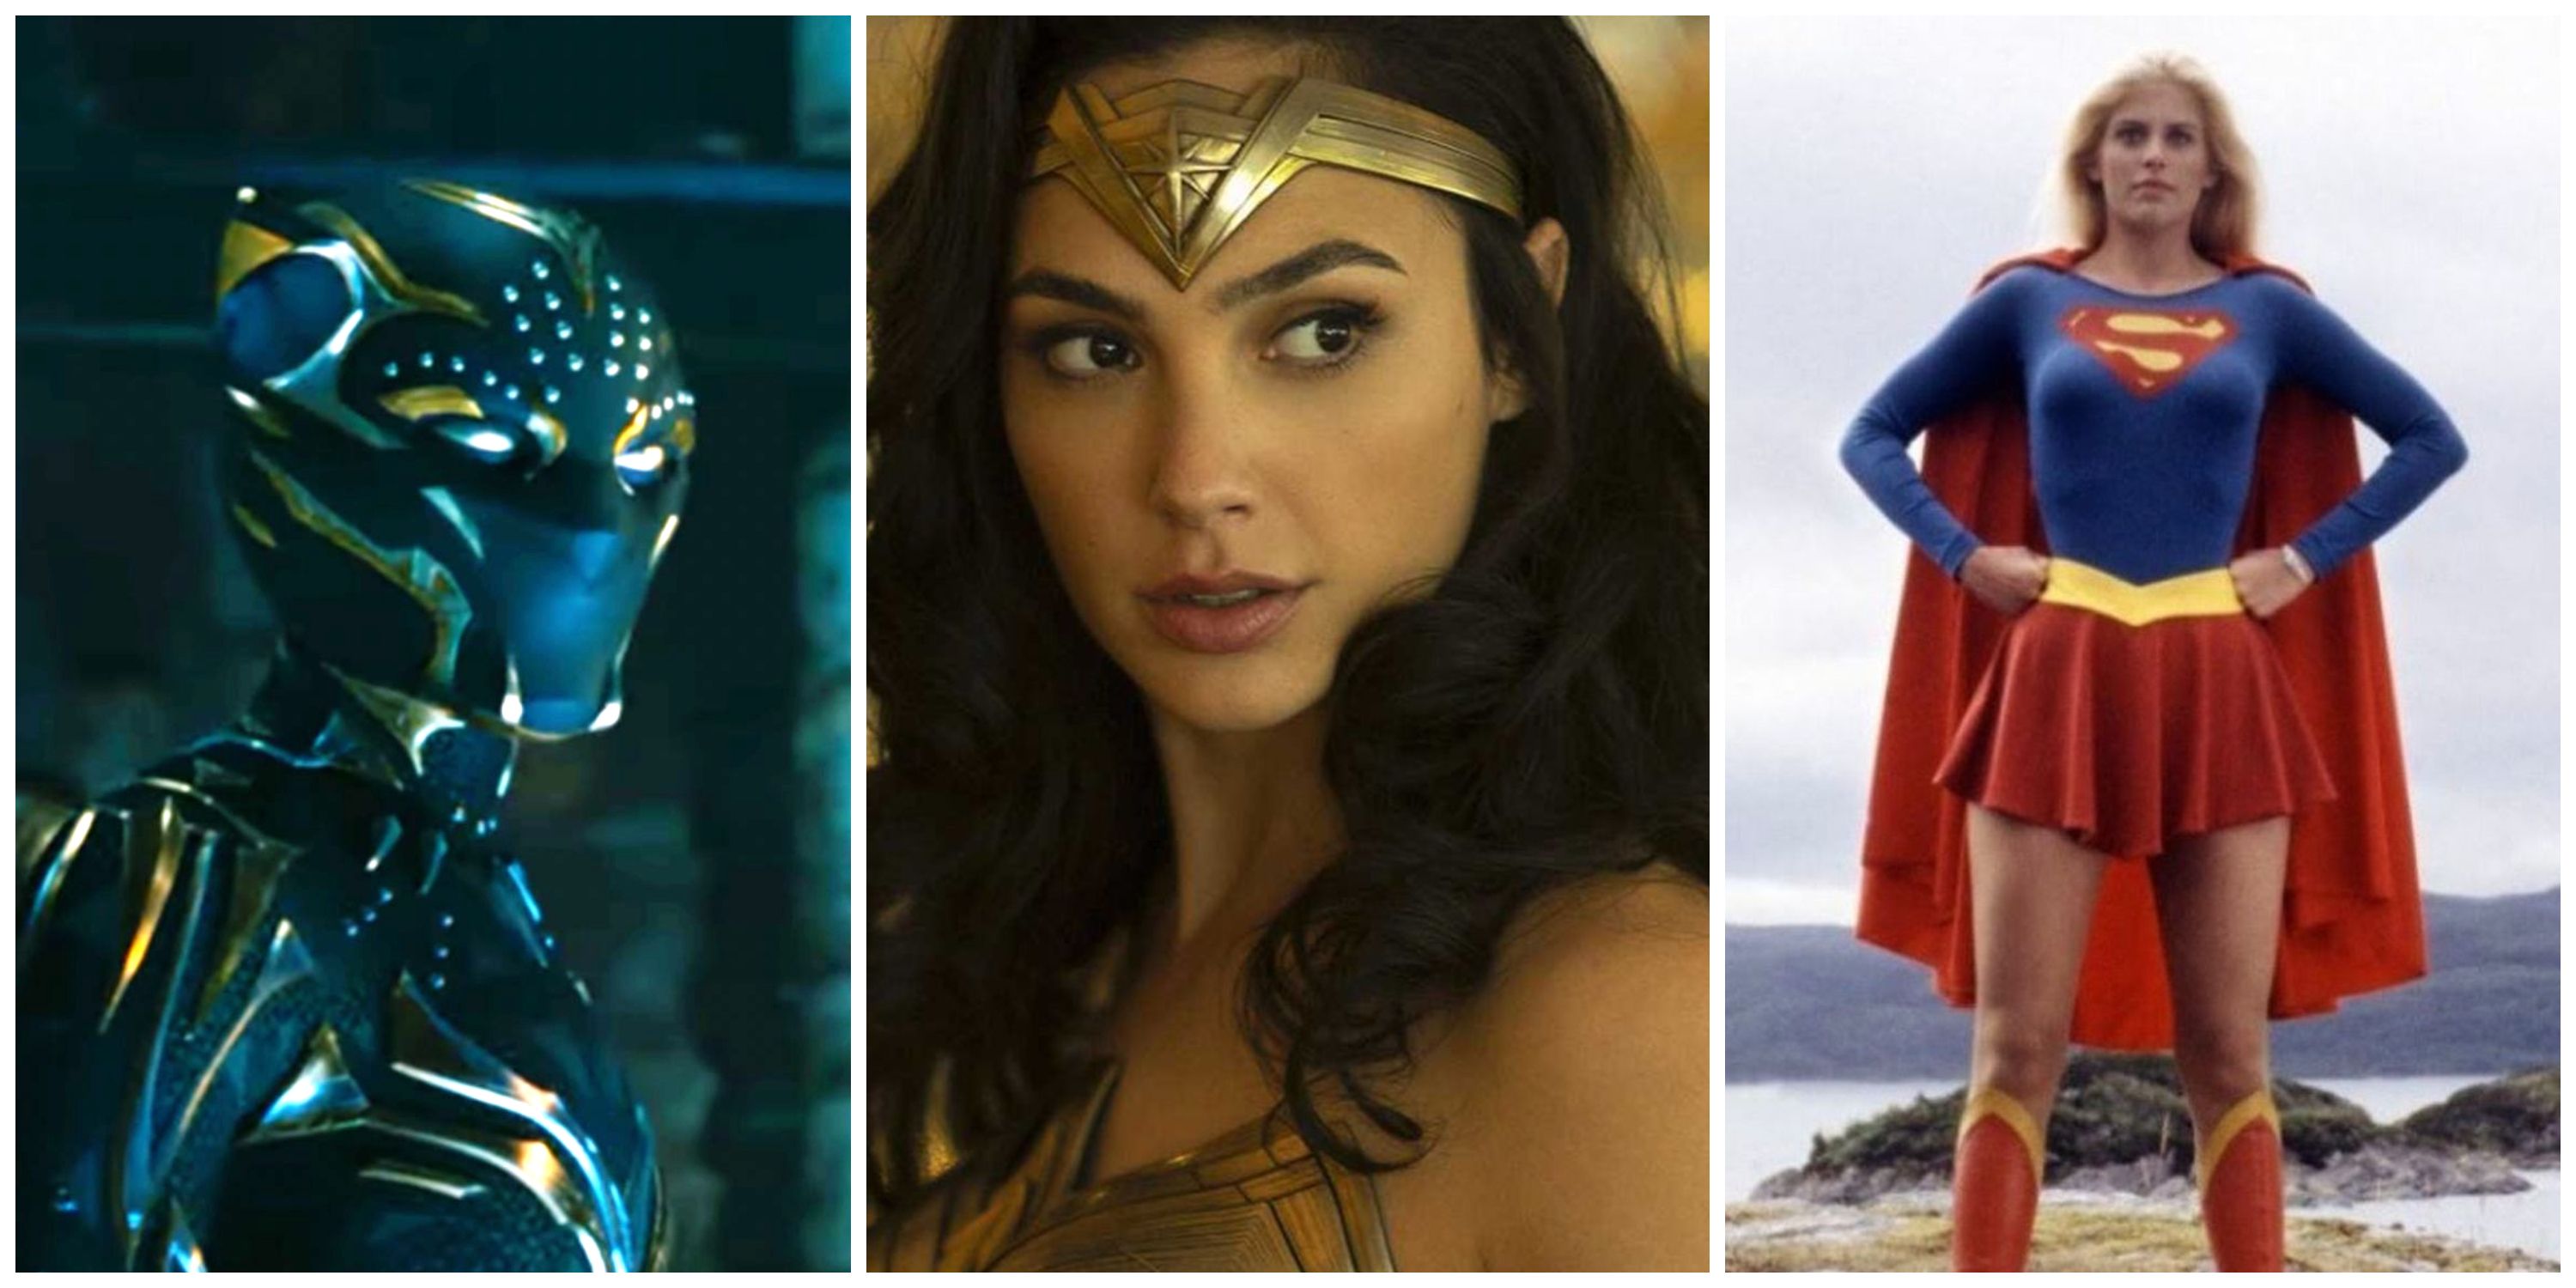 Black Panther, Wonder Woman, and Supergirl